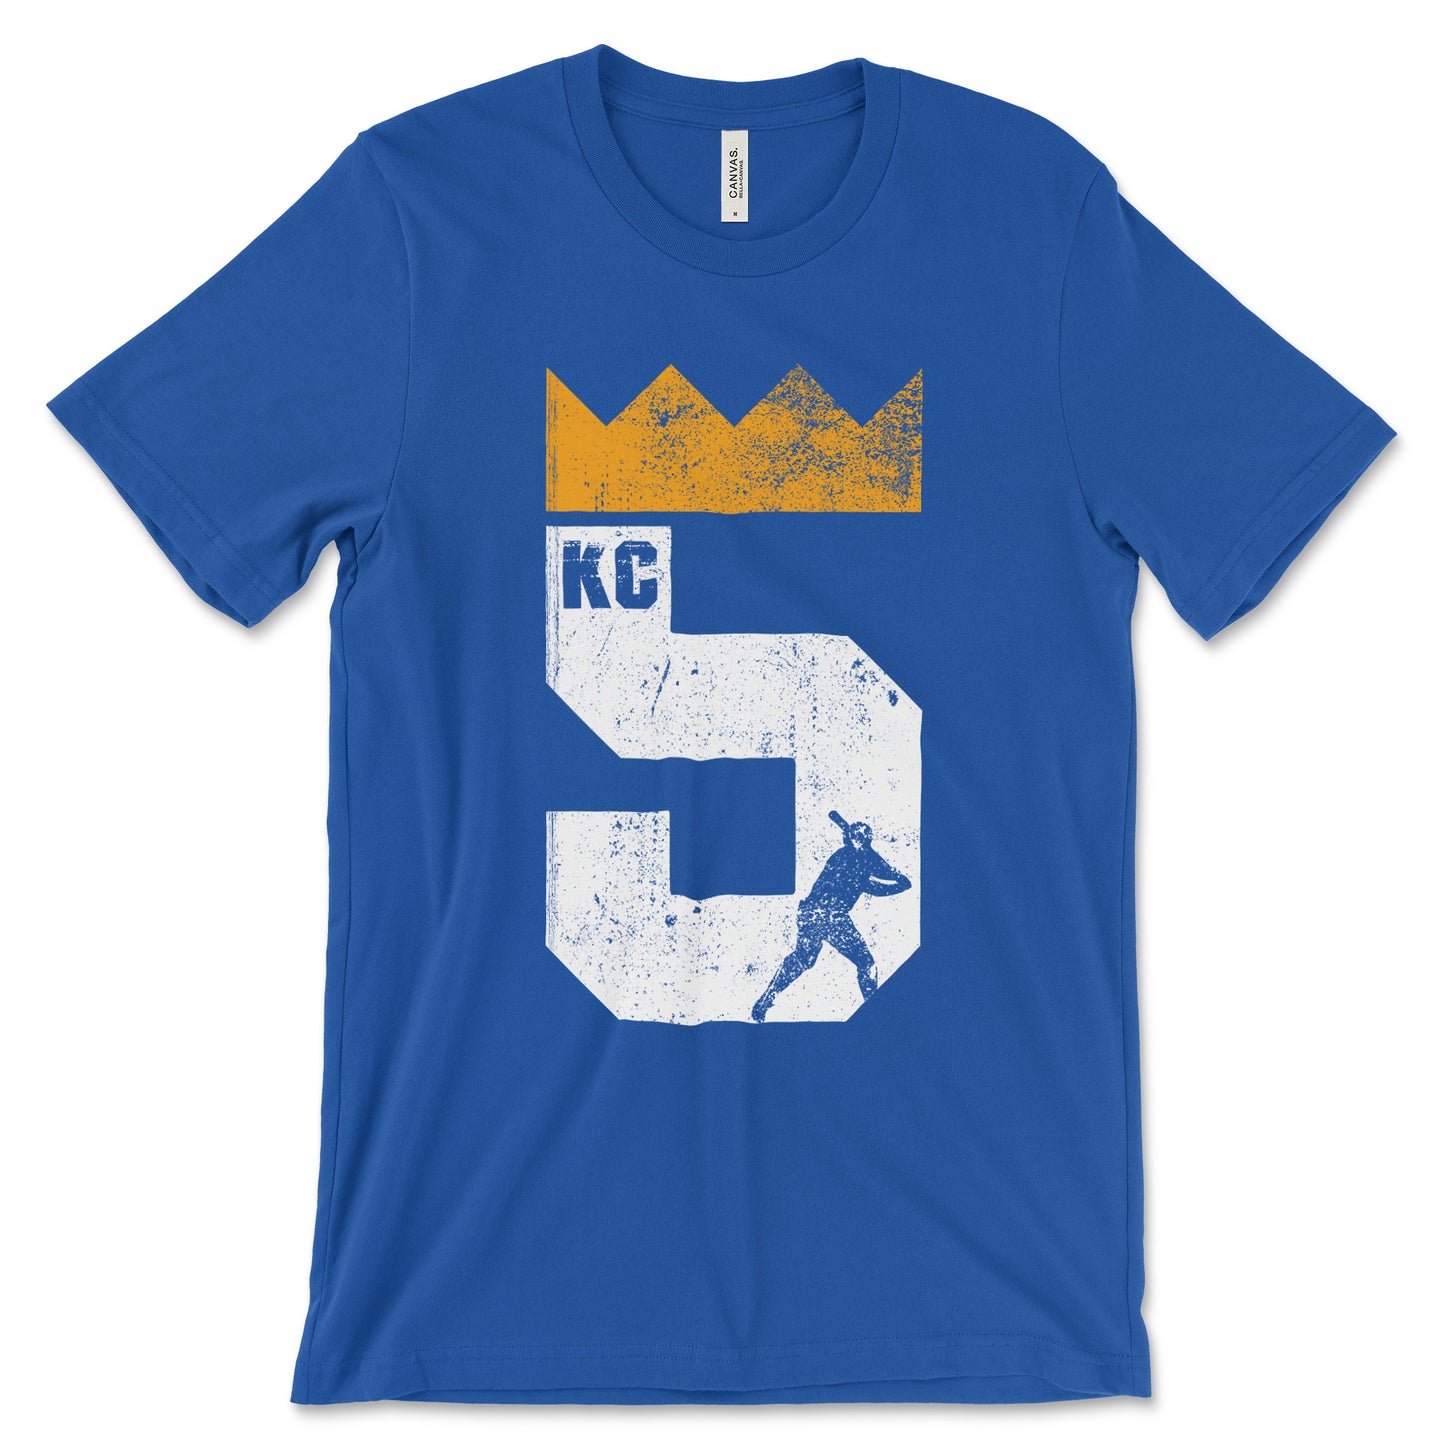 KC Swag - Kansas City Royals, Brett Five Crown design on royal blue unisex t-shirt 